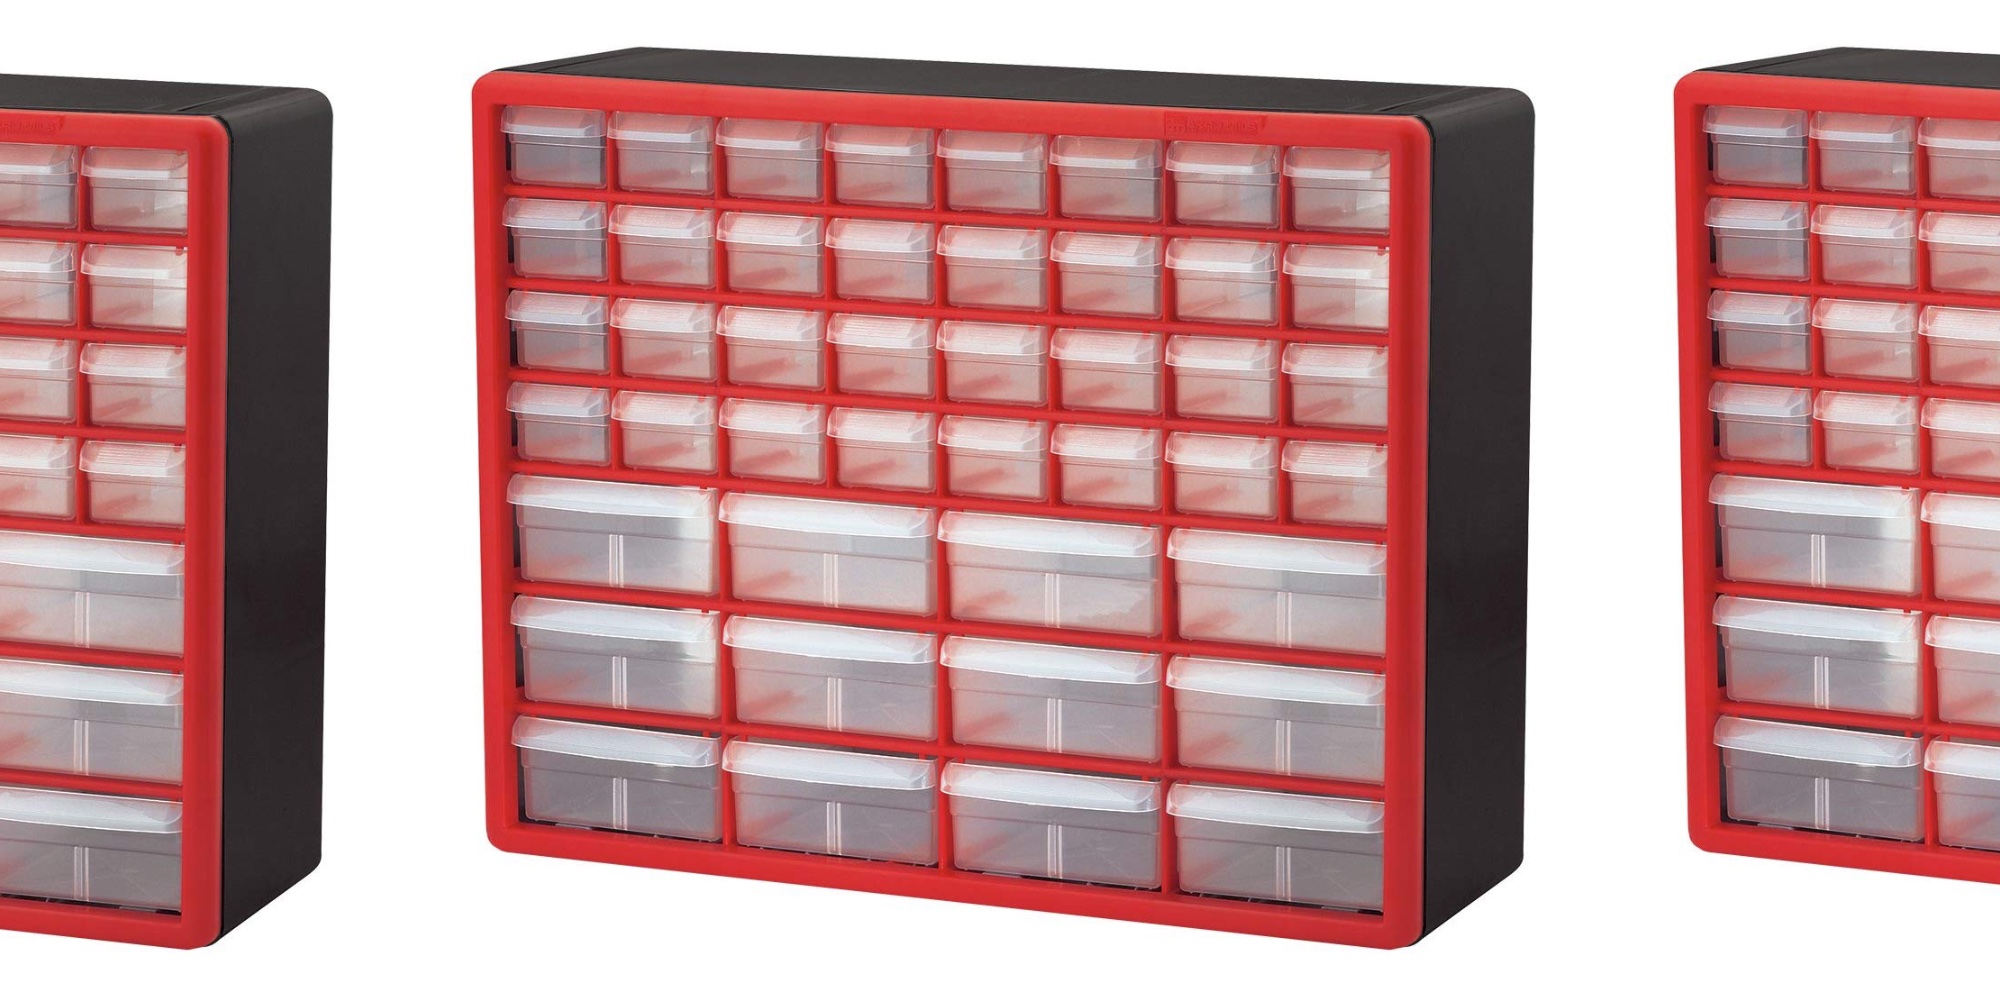 LEGO Storage Box Children Jigsaw Puzzle Building Block Parts Classification  Rangement Partition Sorting Box LEGO Toy